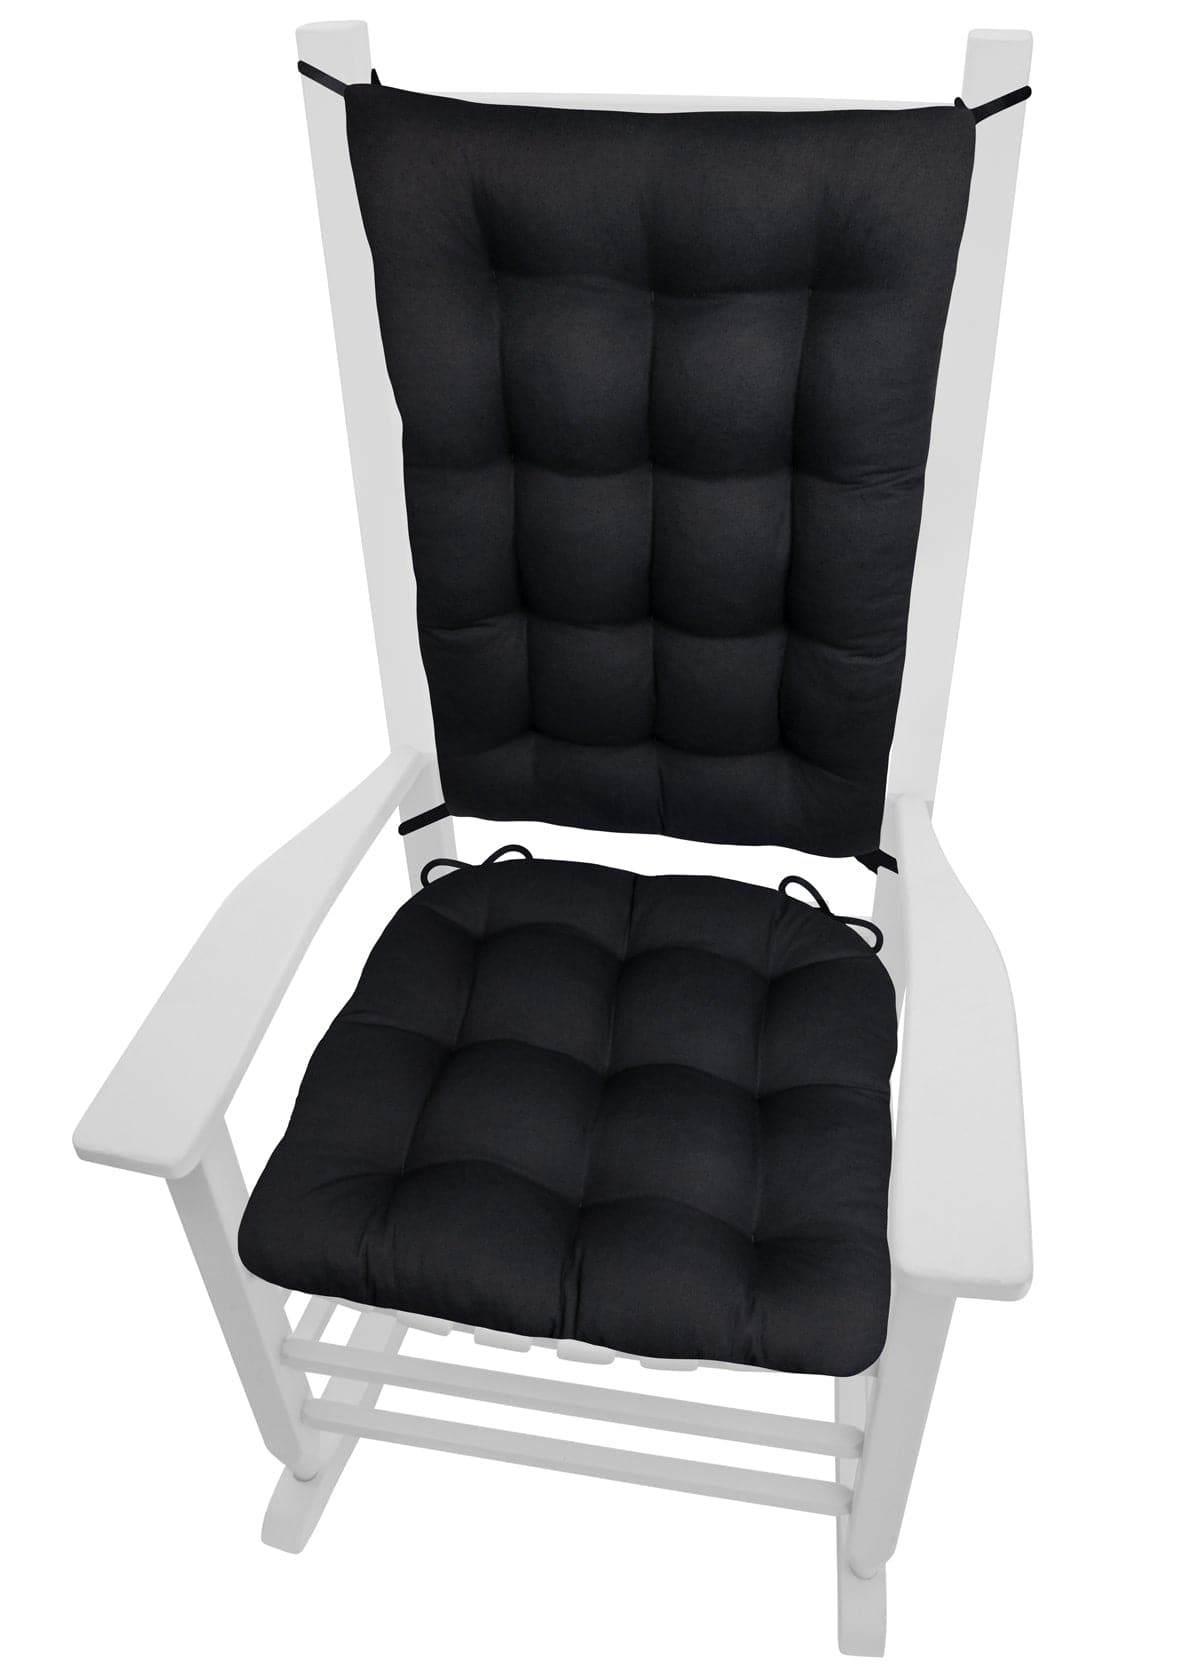 Woodlands Northwoods Rocking Chair Cushion Set - Bear